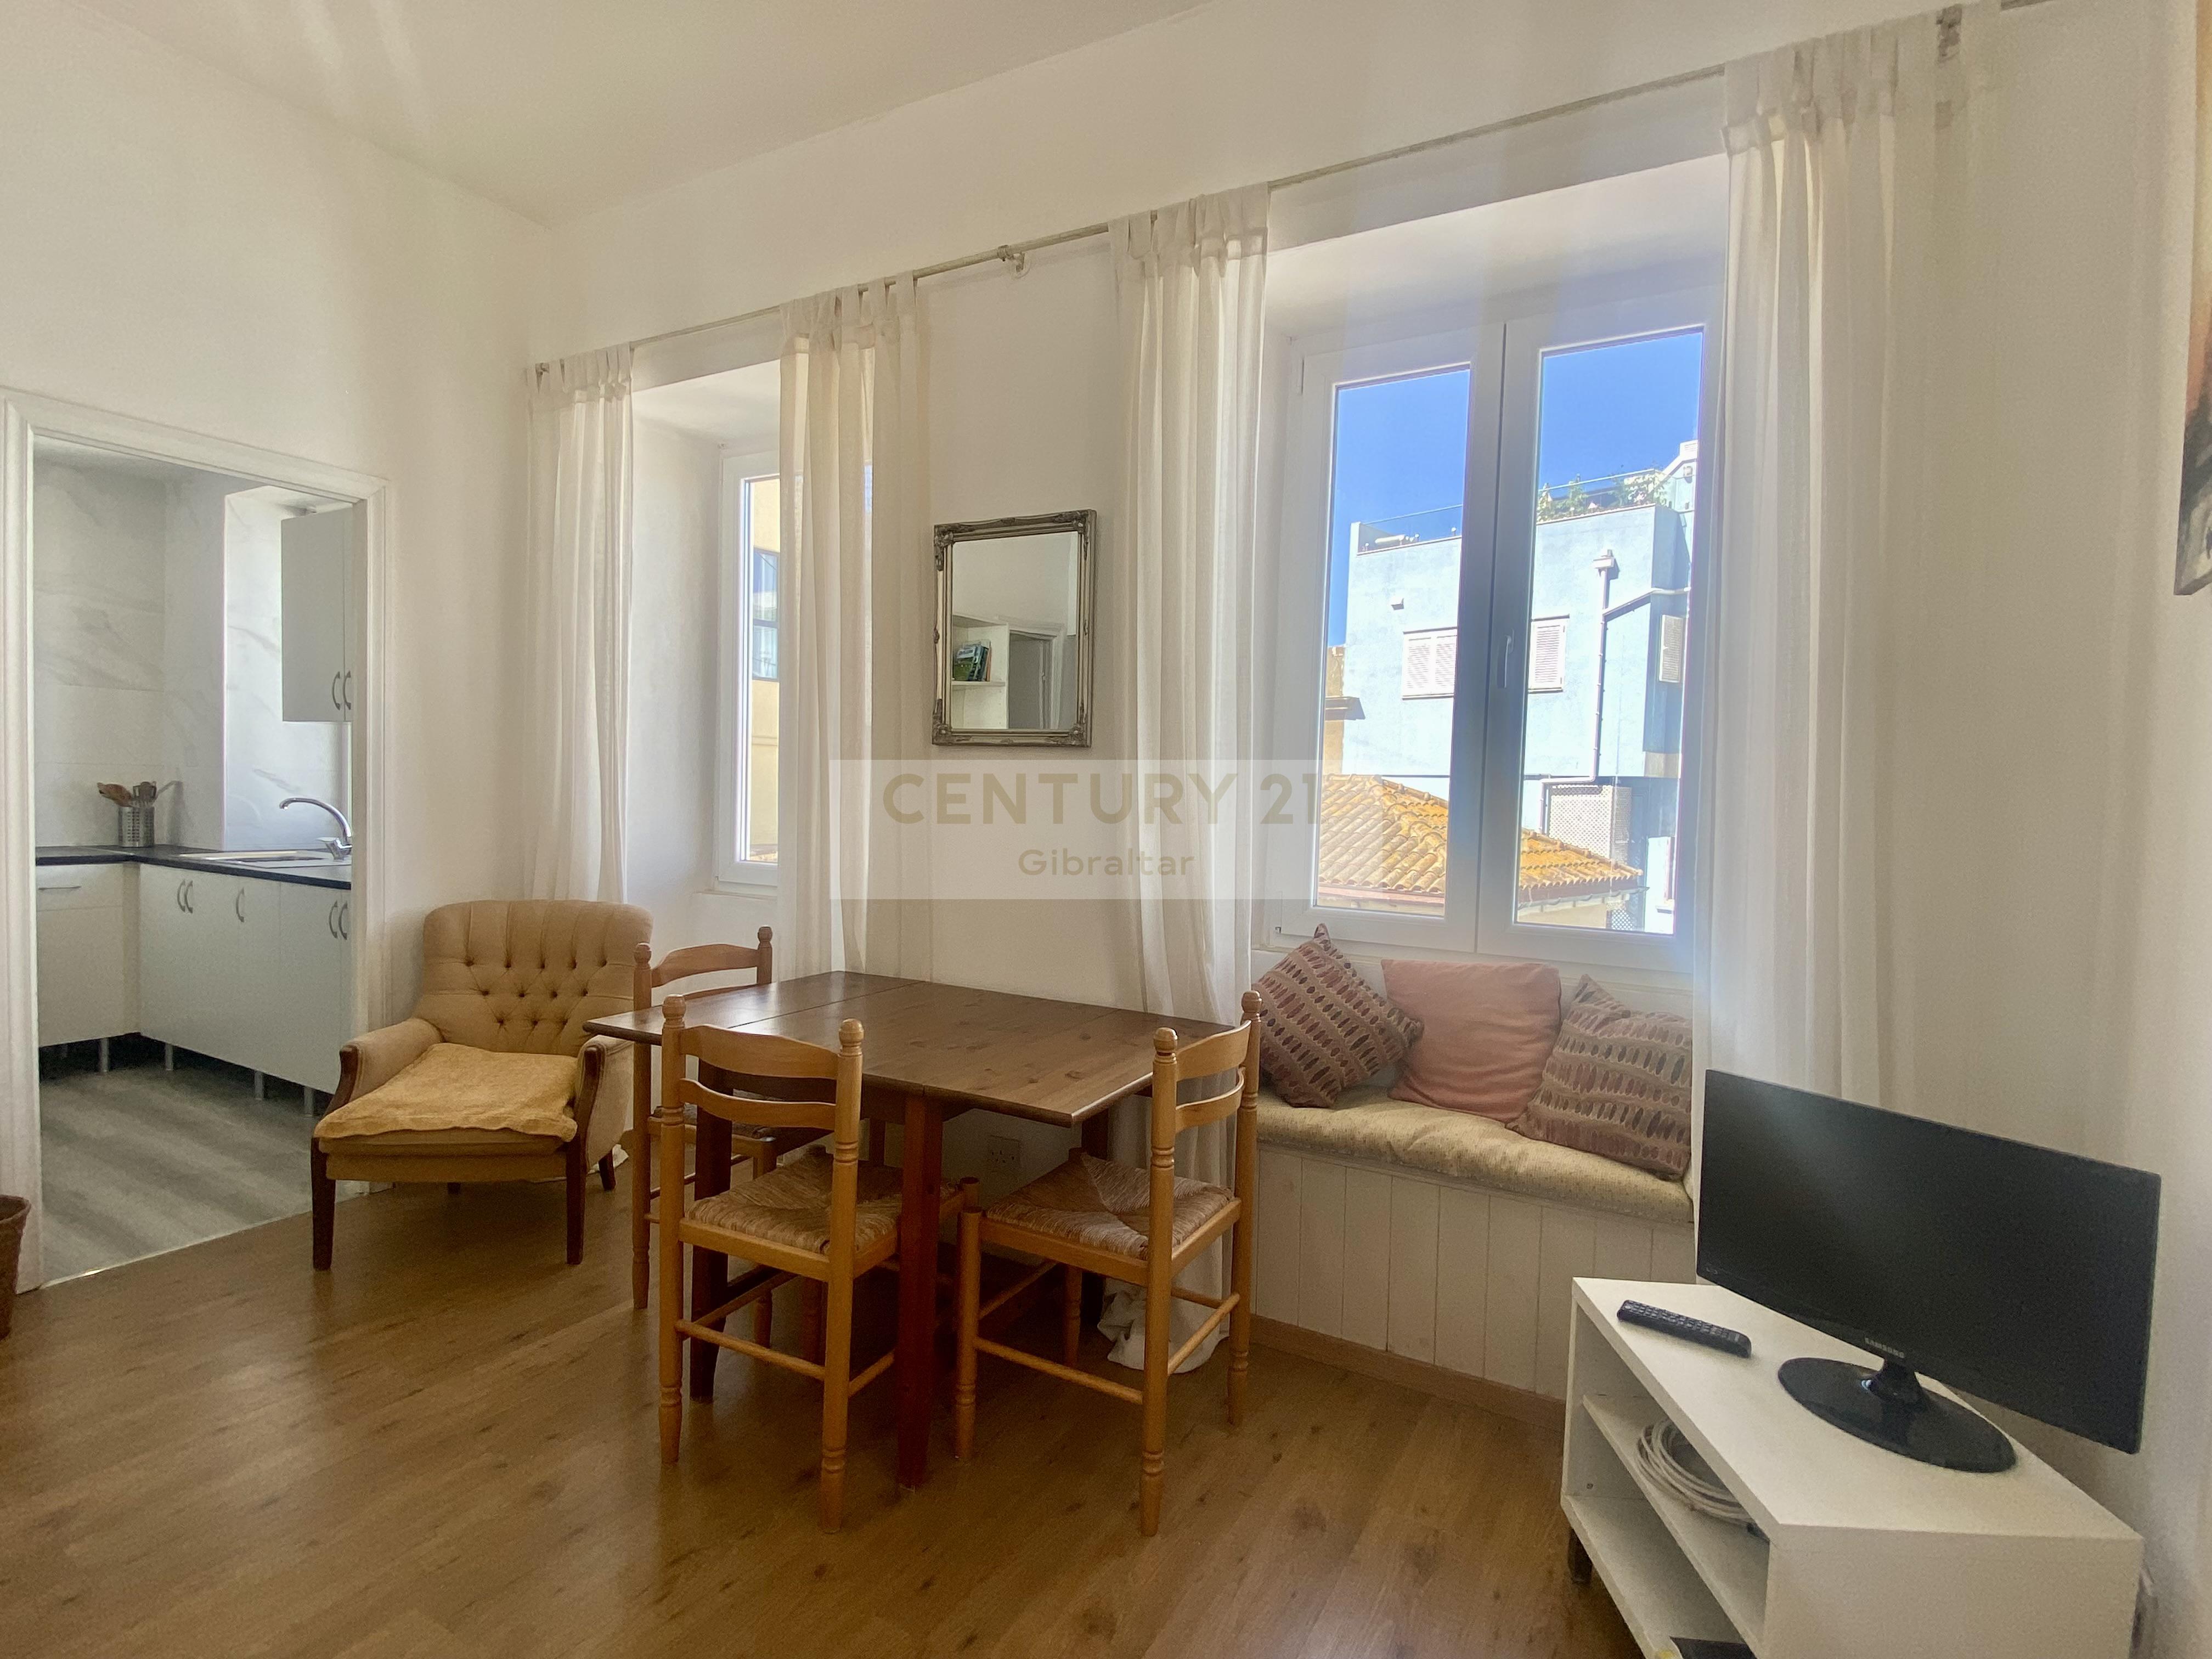 1 Bedroom Apartment For Rental In Upper Town Gibraltar